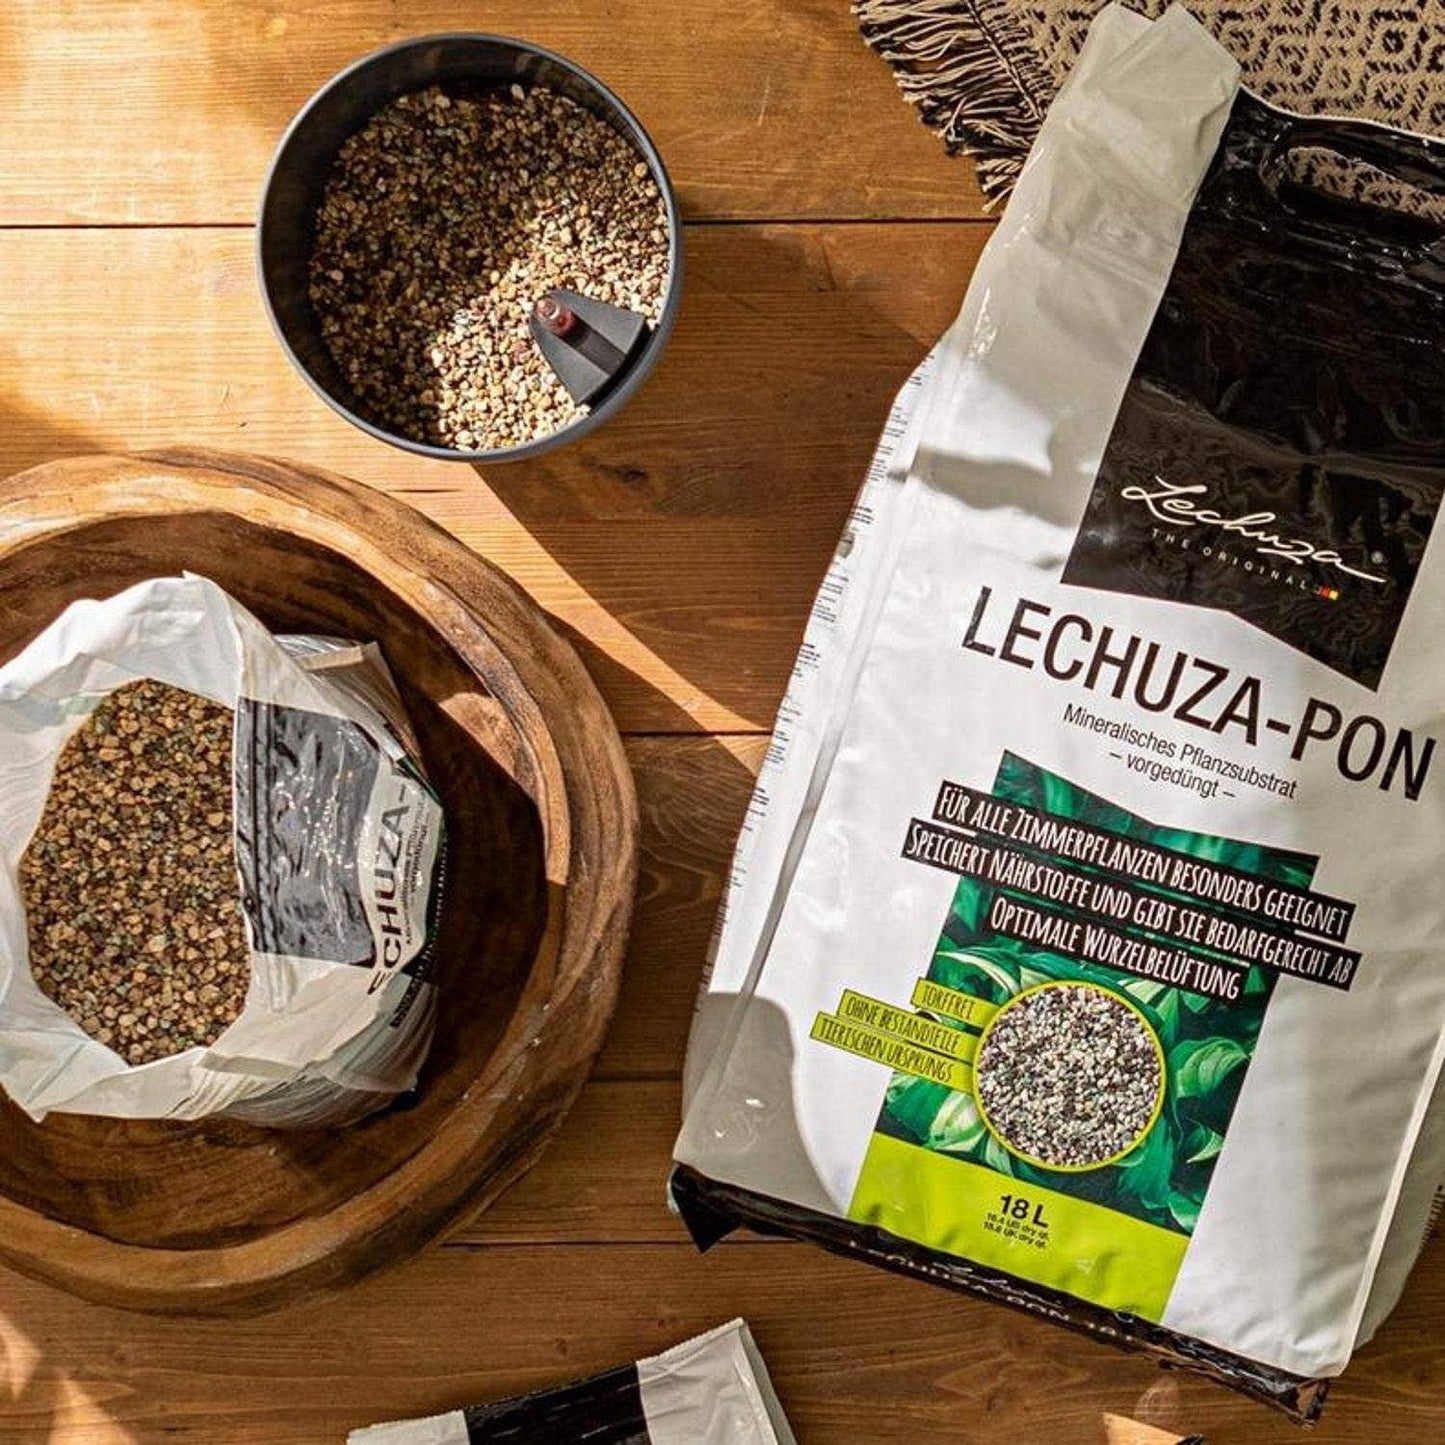 LECHUZA PON Potting Soil for Indoor Plants 6 Liter